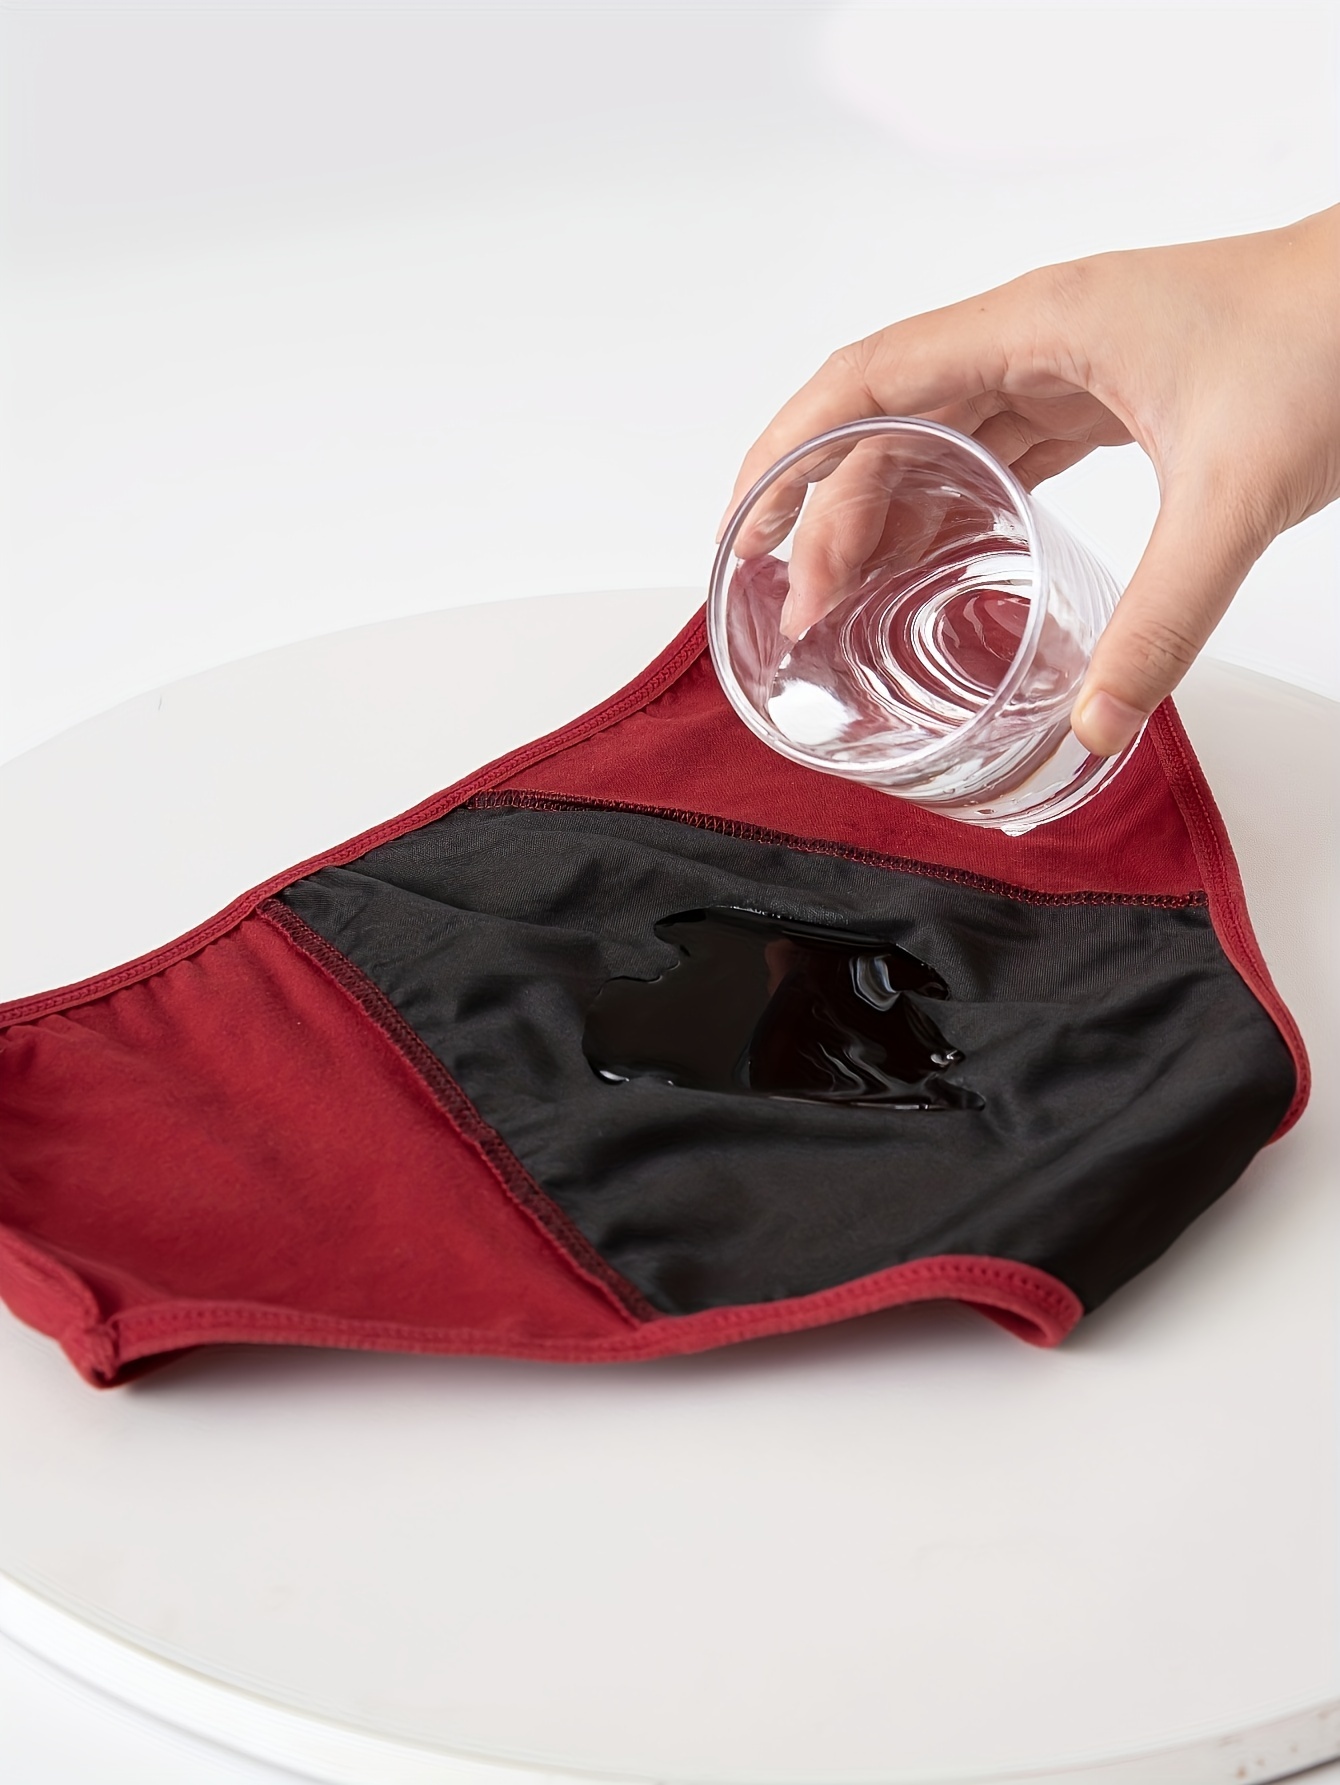 Leakproof Menstrual Period Panties Women Plus Size Underwear